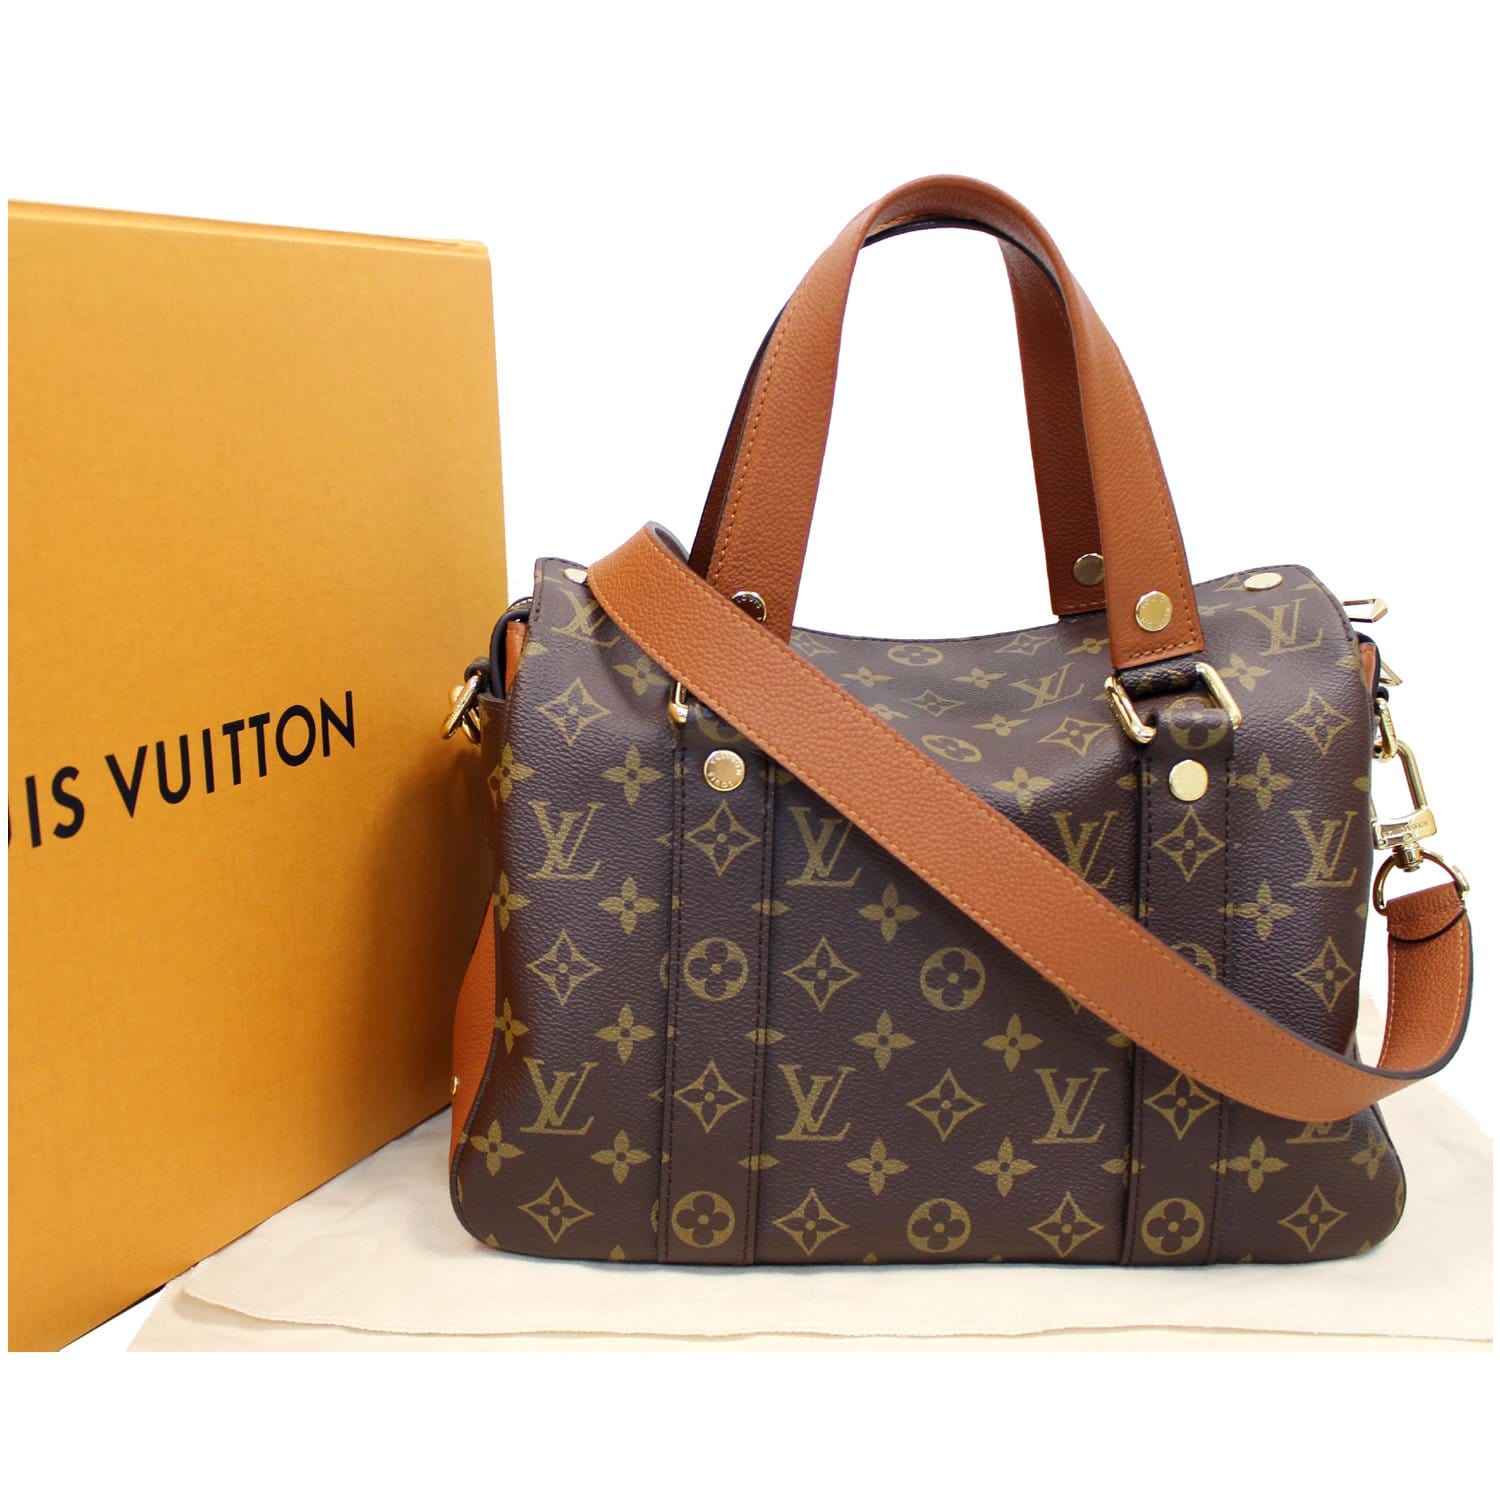 Louis Vuitton Manhattan NM Monogram Canvas Shoulder Bag